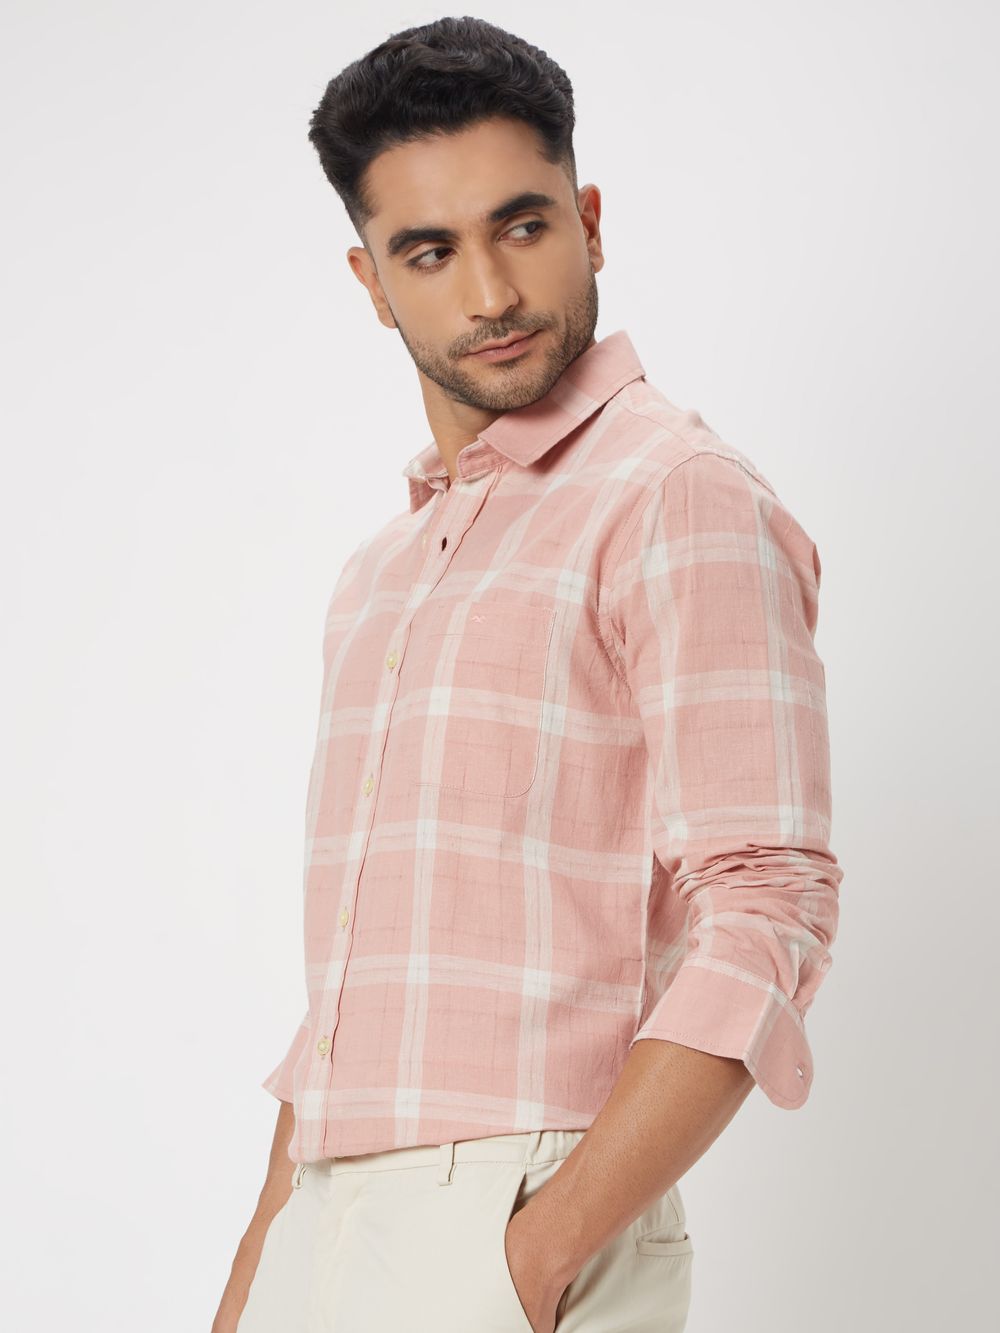 Pastel Pink Windowpane Check Slim Fit Casual Shirt